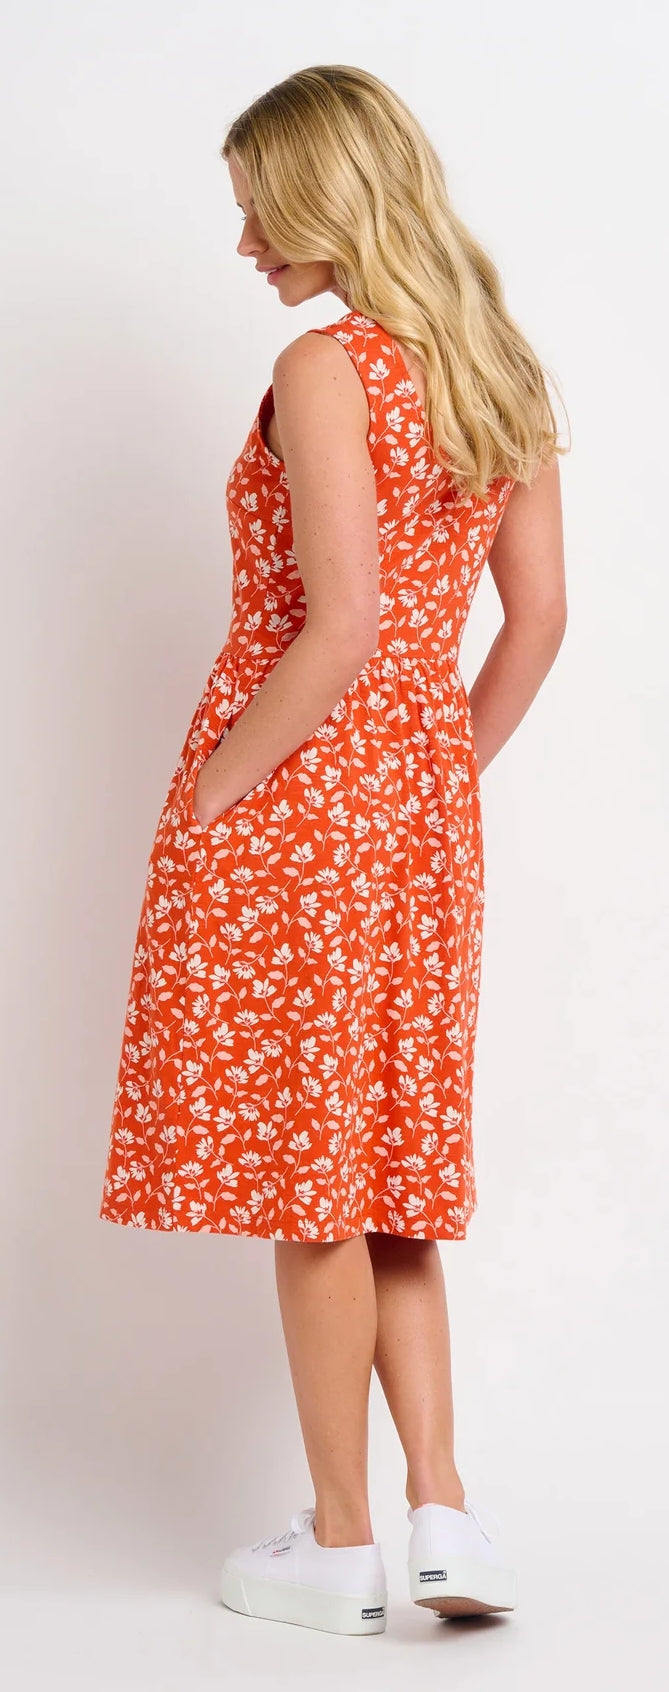 Brakeburn Womens 'Floating Floral Sleeveless Dress' - Coral